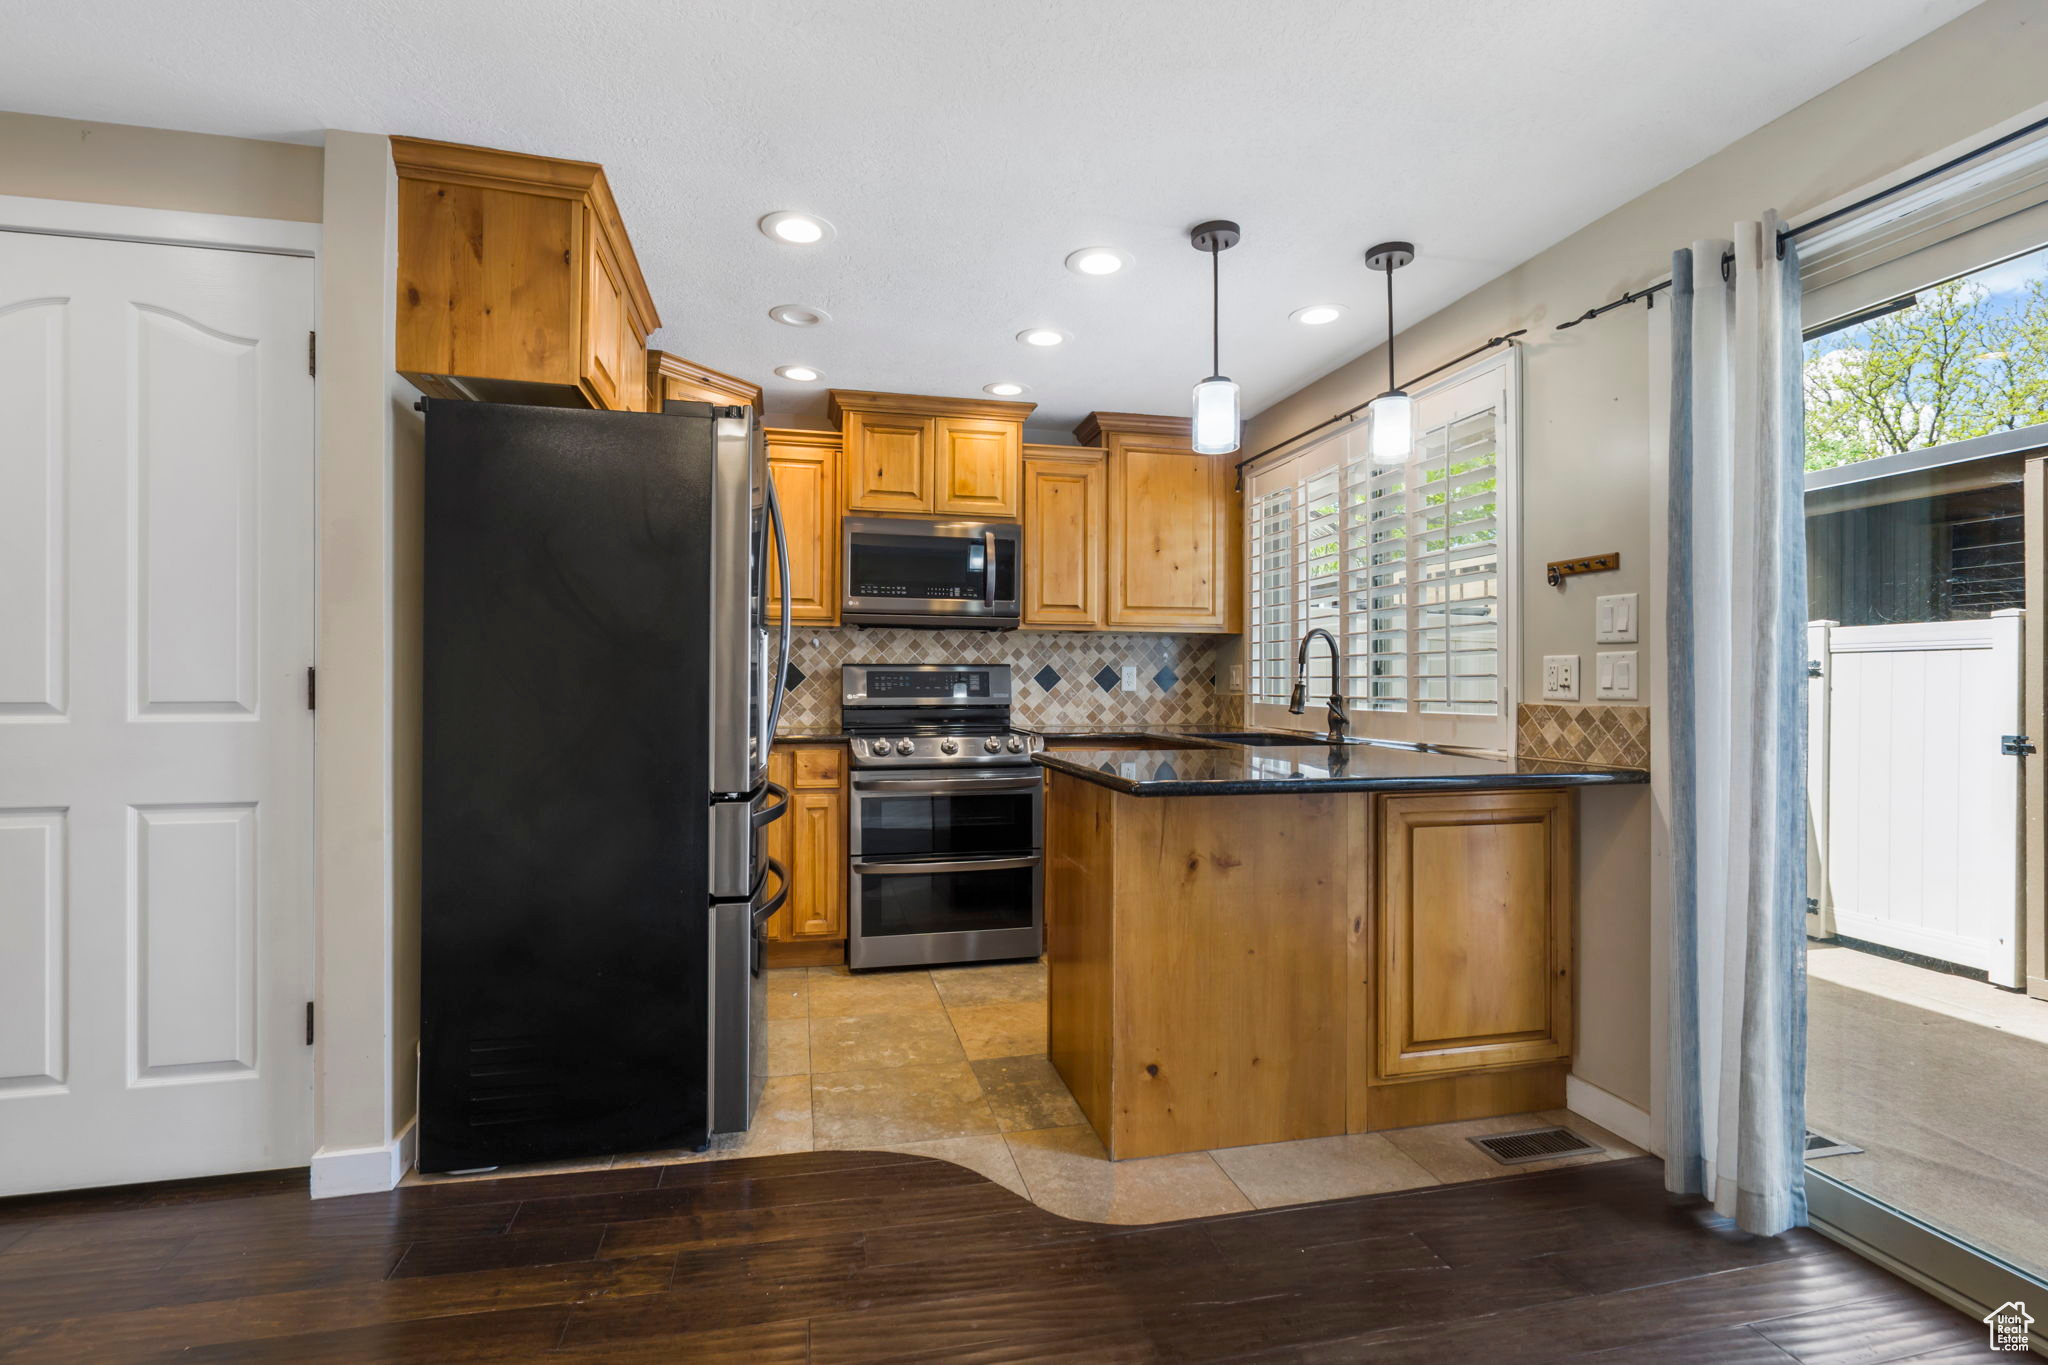 Kitchen with stainless steel finish appliances, backsplash, decorative light fixtures, light hardwood / wood-style flooring, and kitchen peninsula